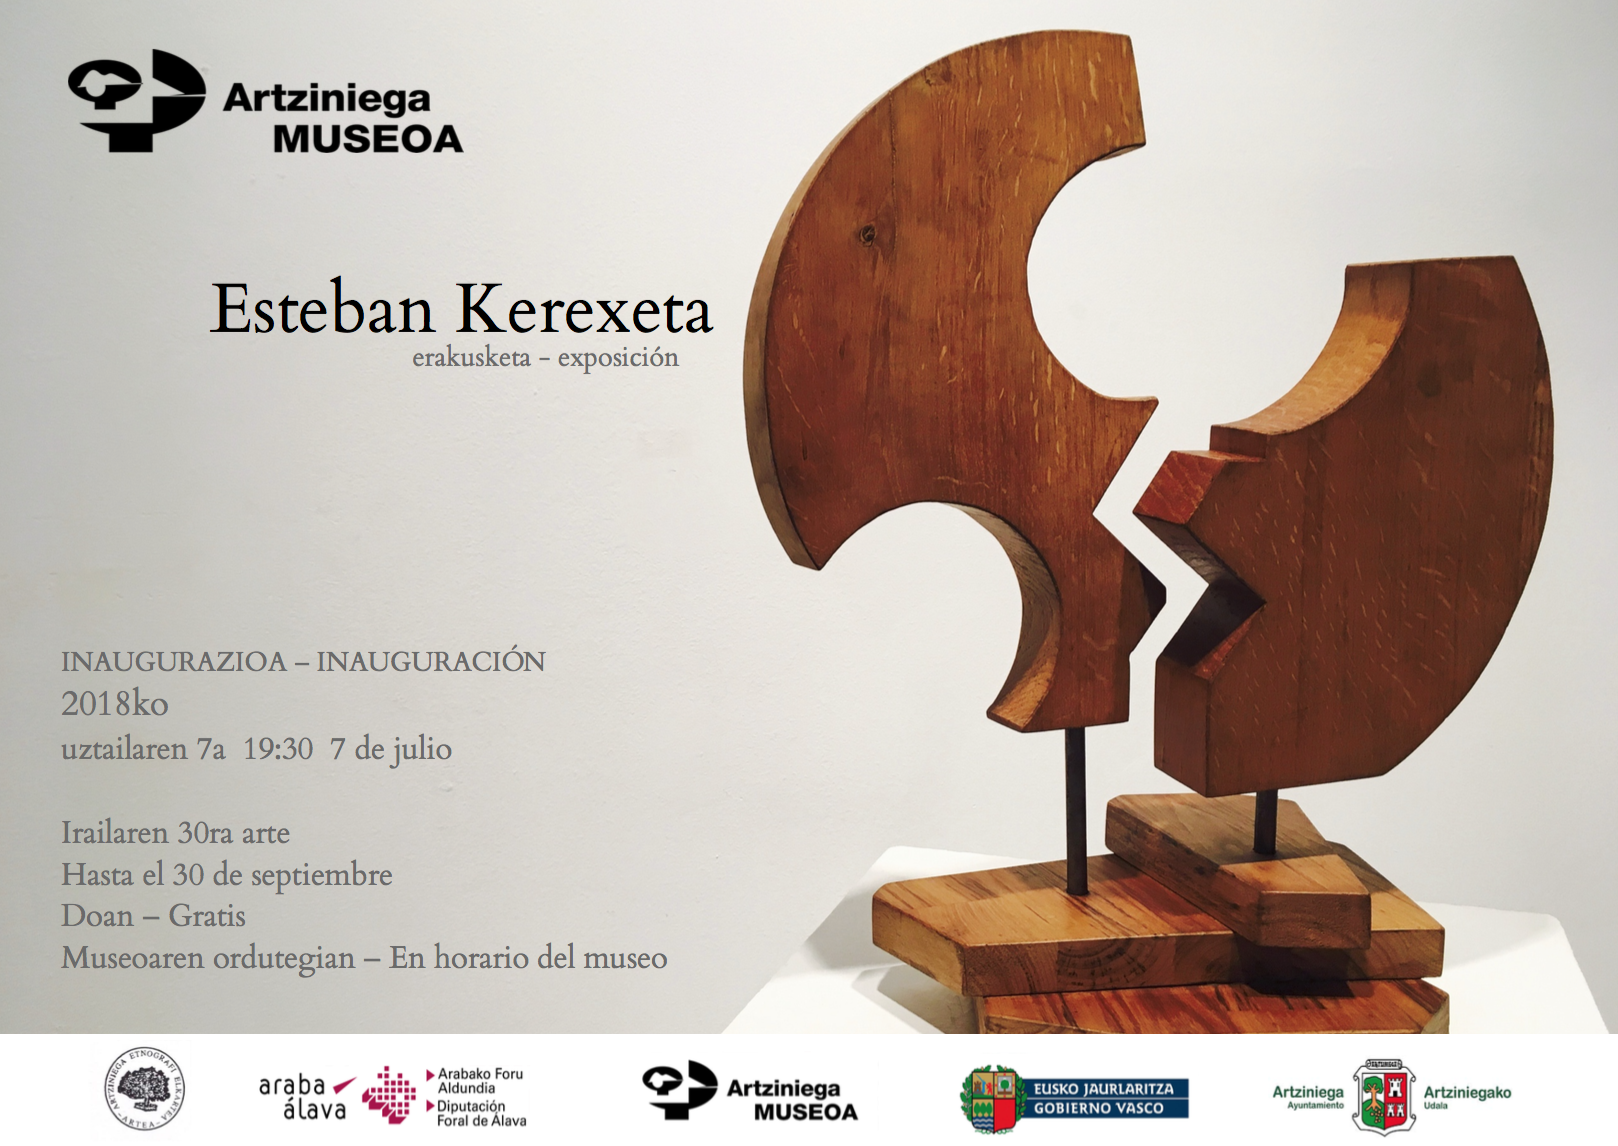 ESTEBAN KEREXETA-ESKULTURA ERAKUSKETA-EXPOSICIÓN ESCULTURA-Irailaren 30 arte-hasta el 30 de septiembre